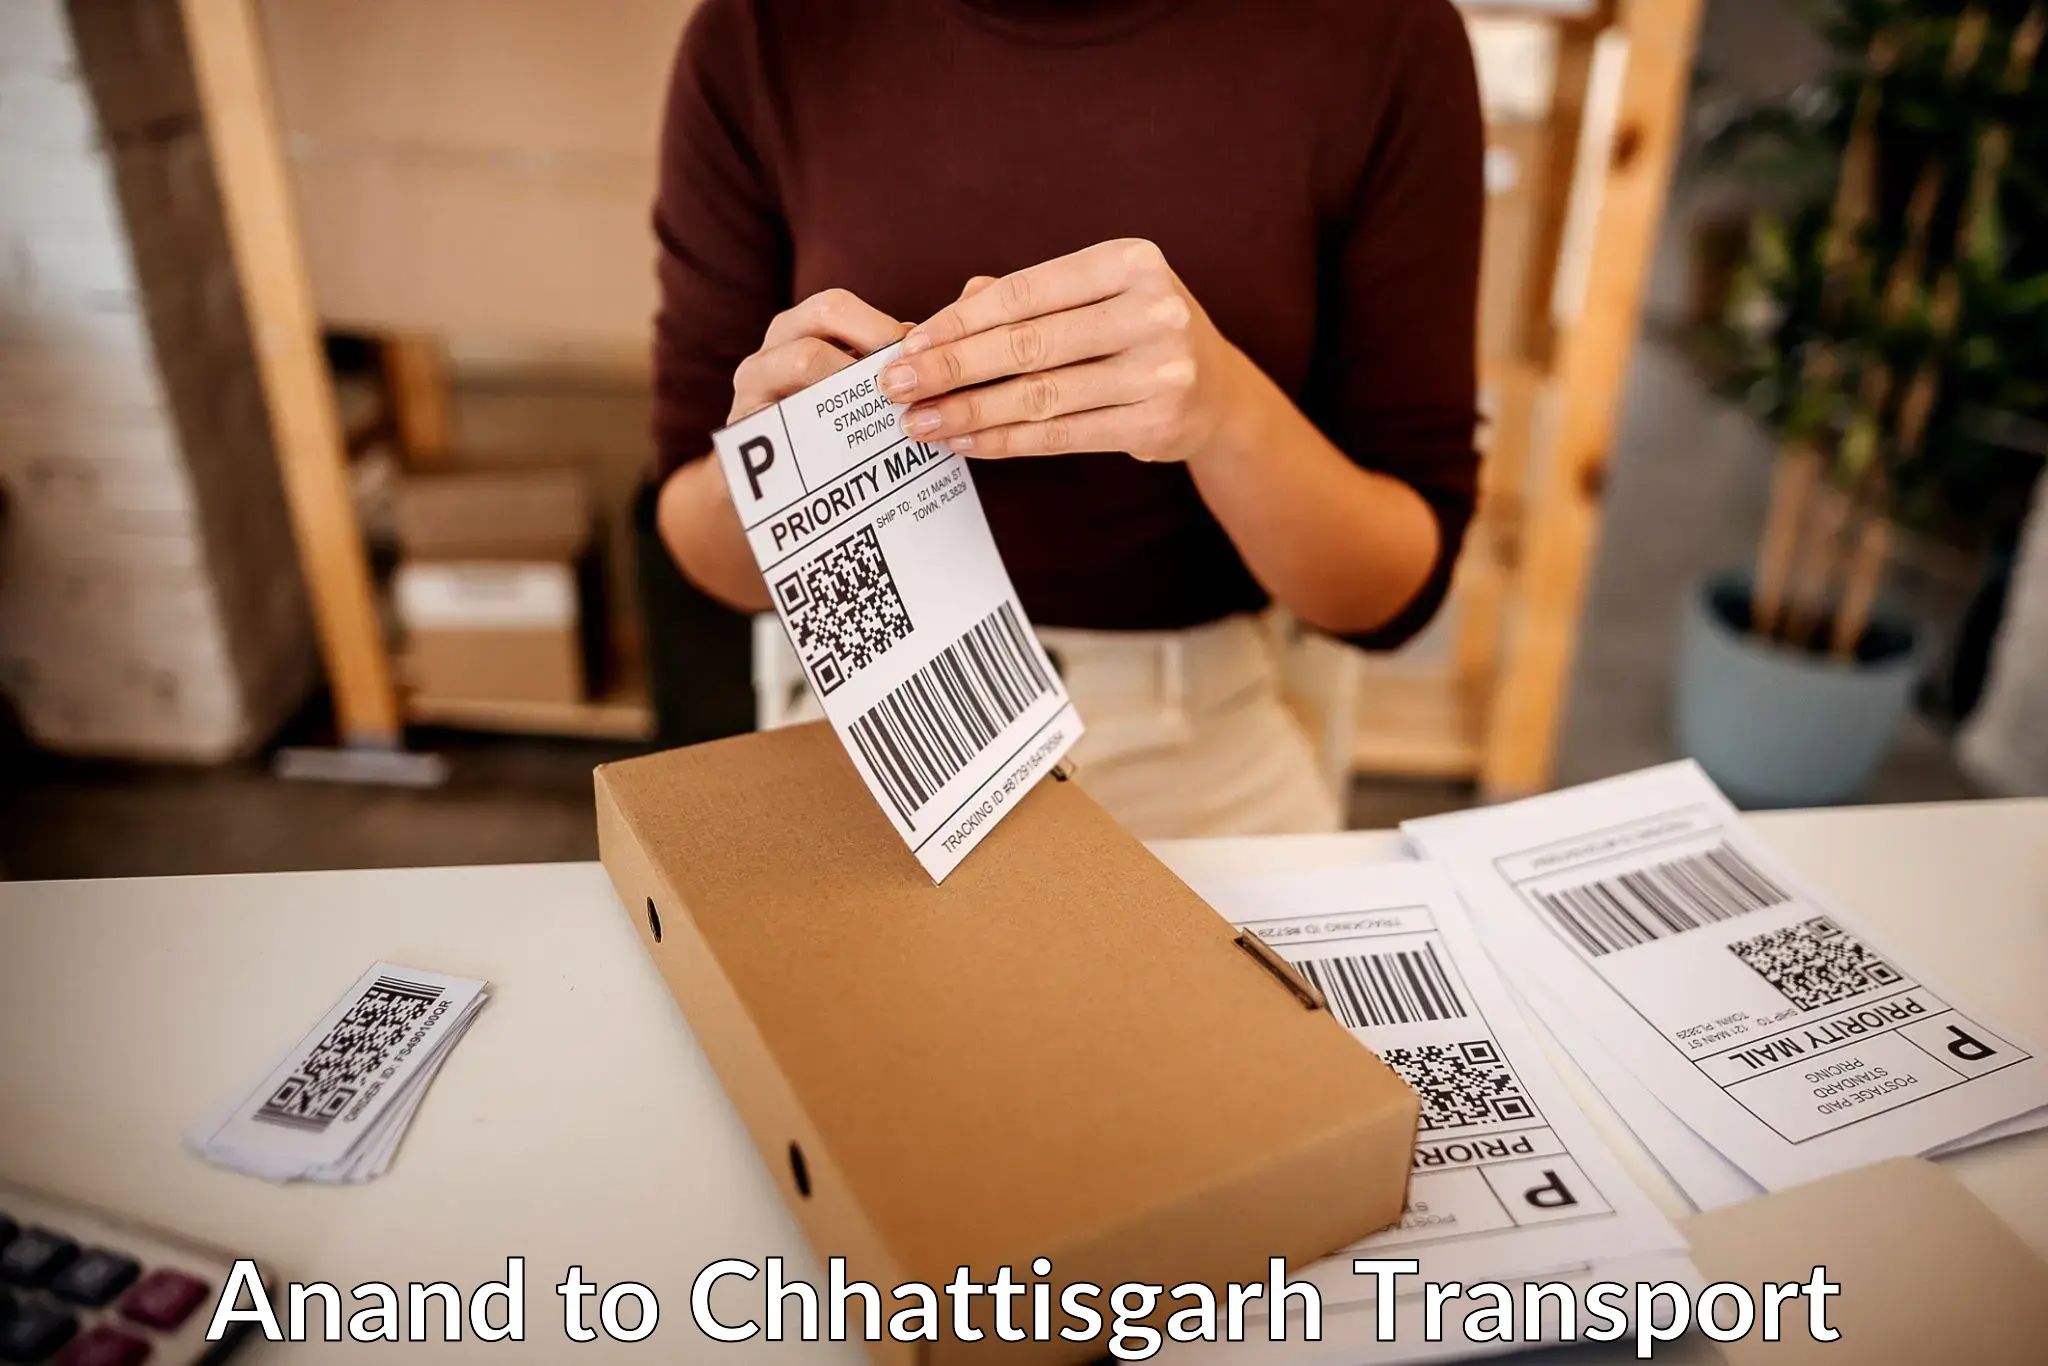 Online transport booking Anand to Patna Chhattisgarh